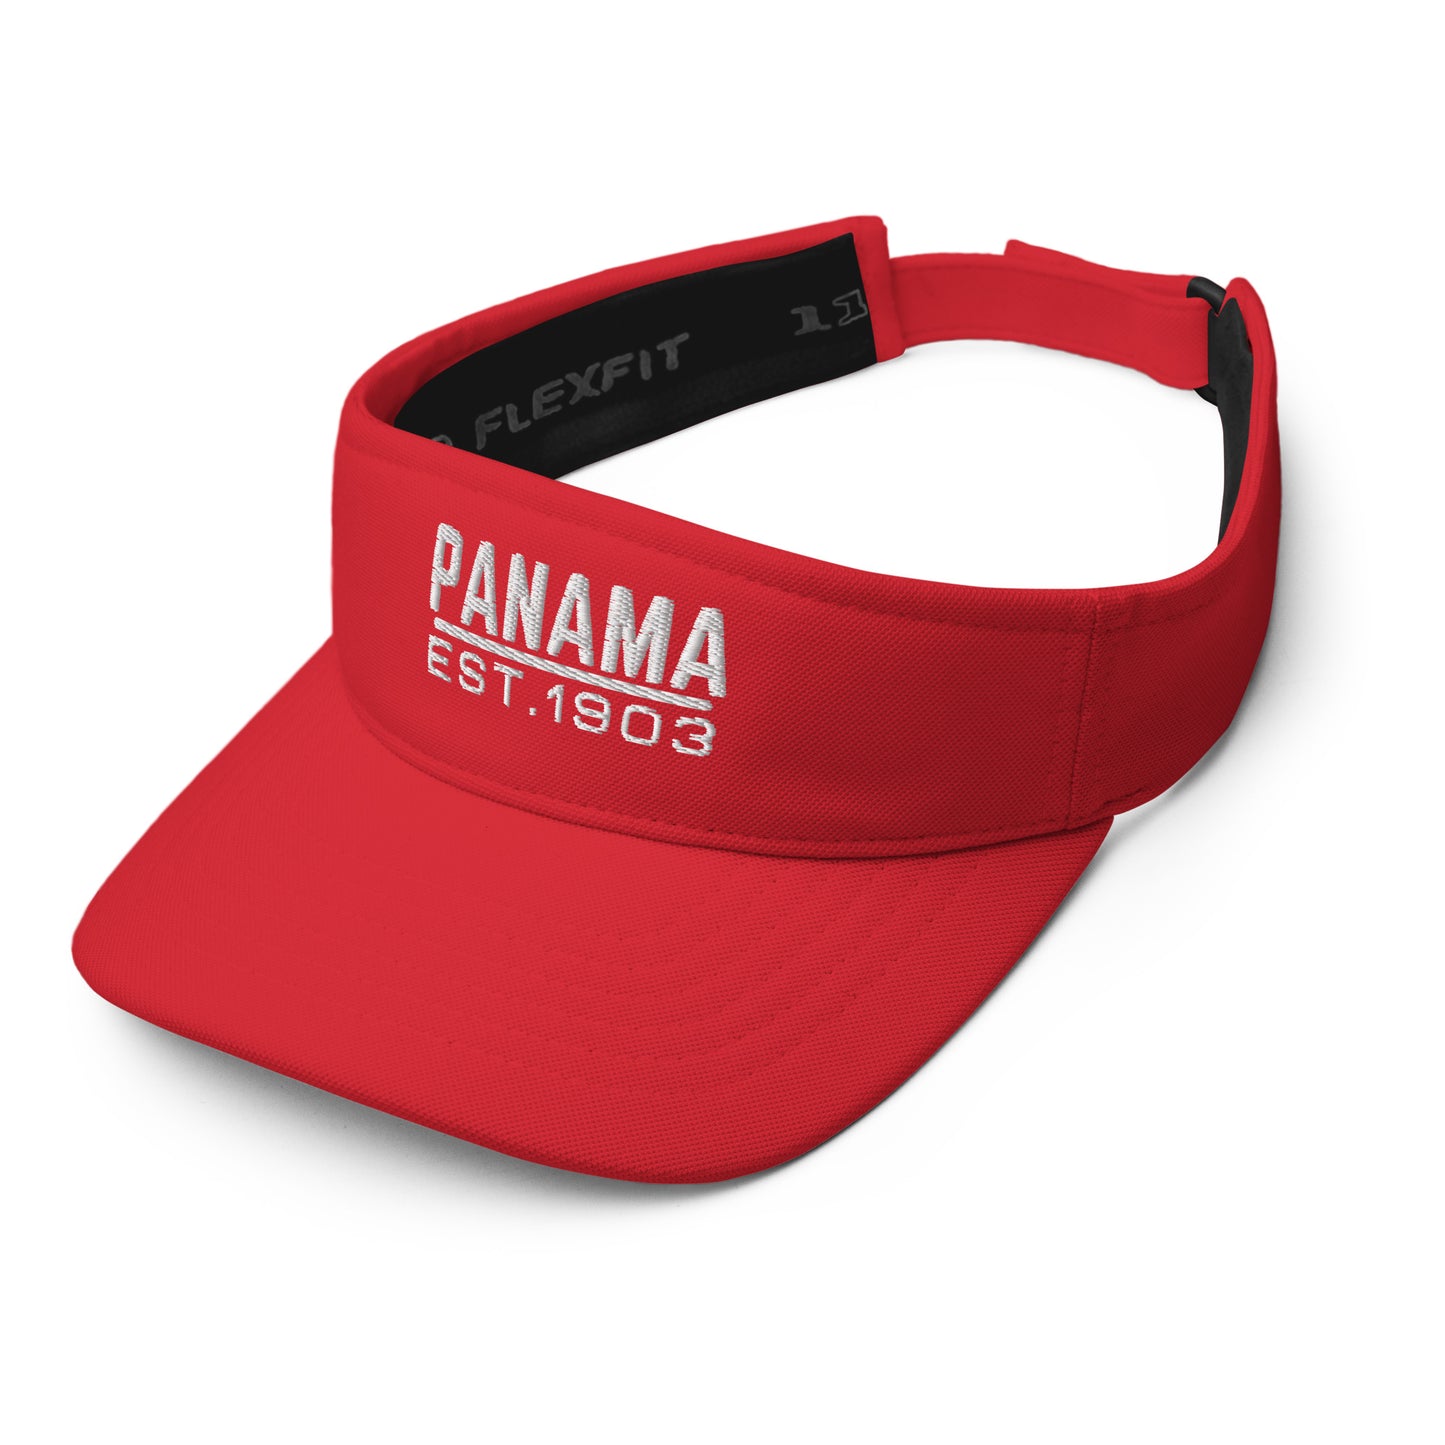 Panama Established in 1903 Visor